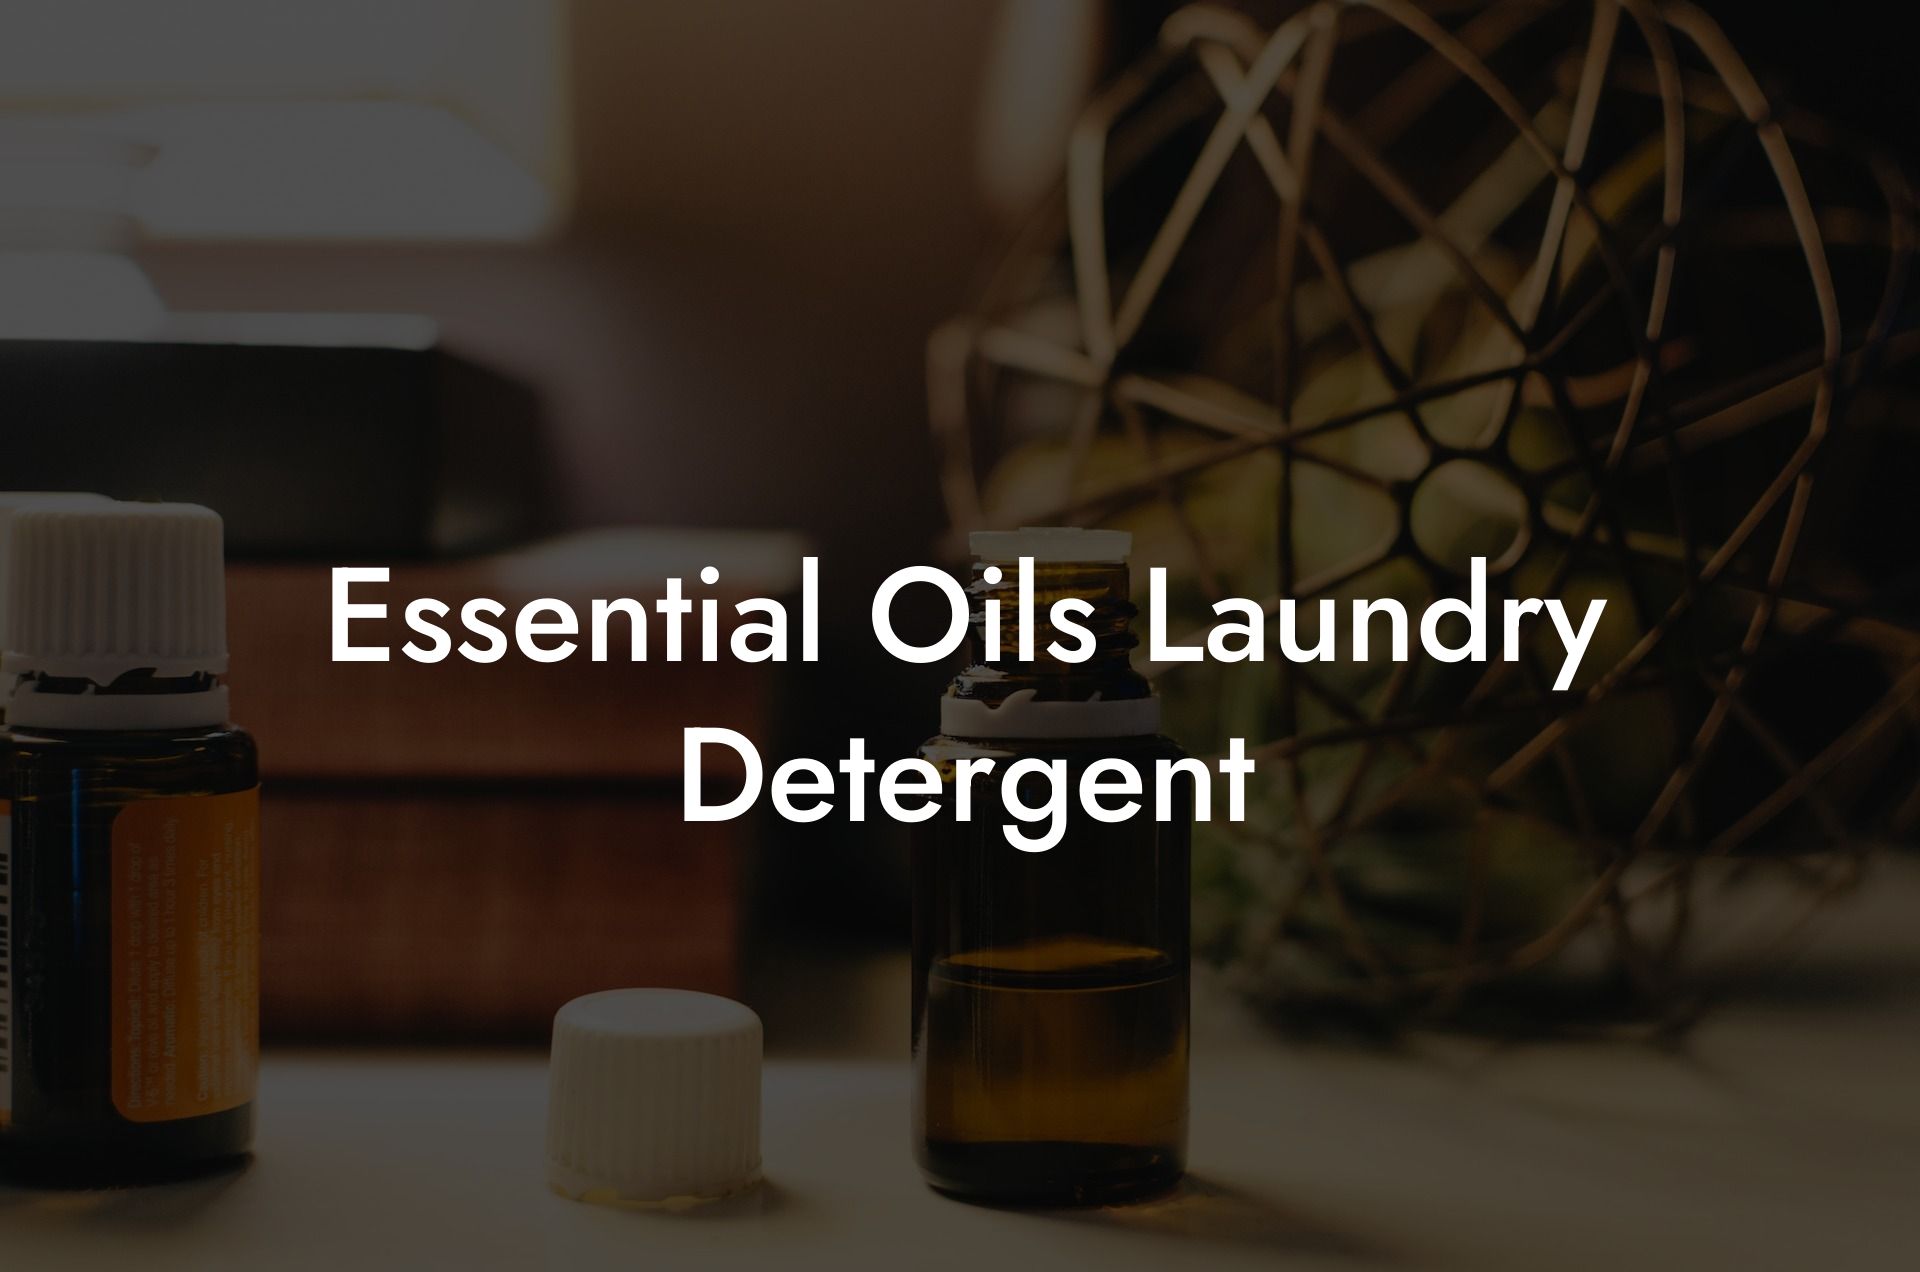 Essential Oils Laundry Detergent